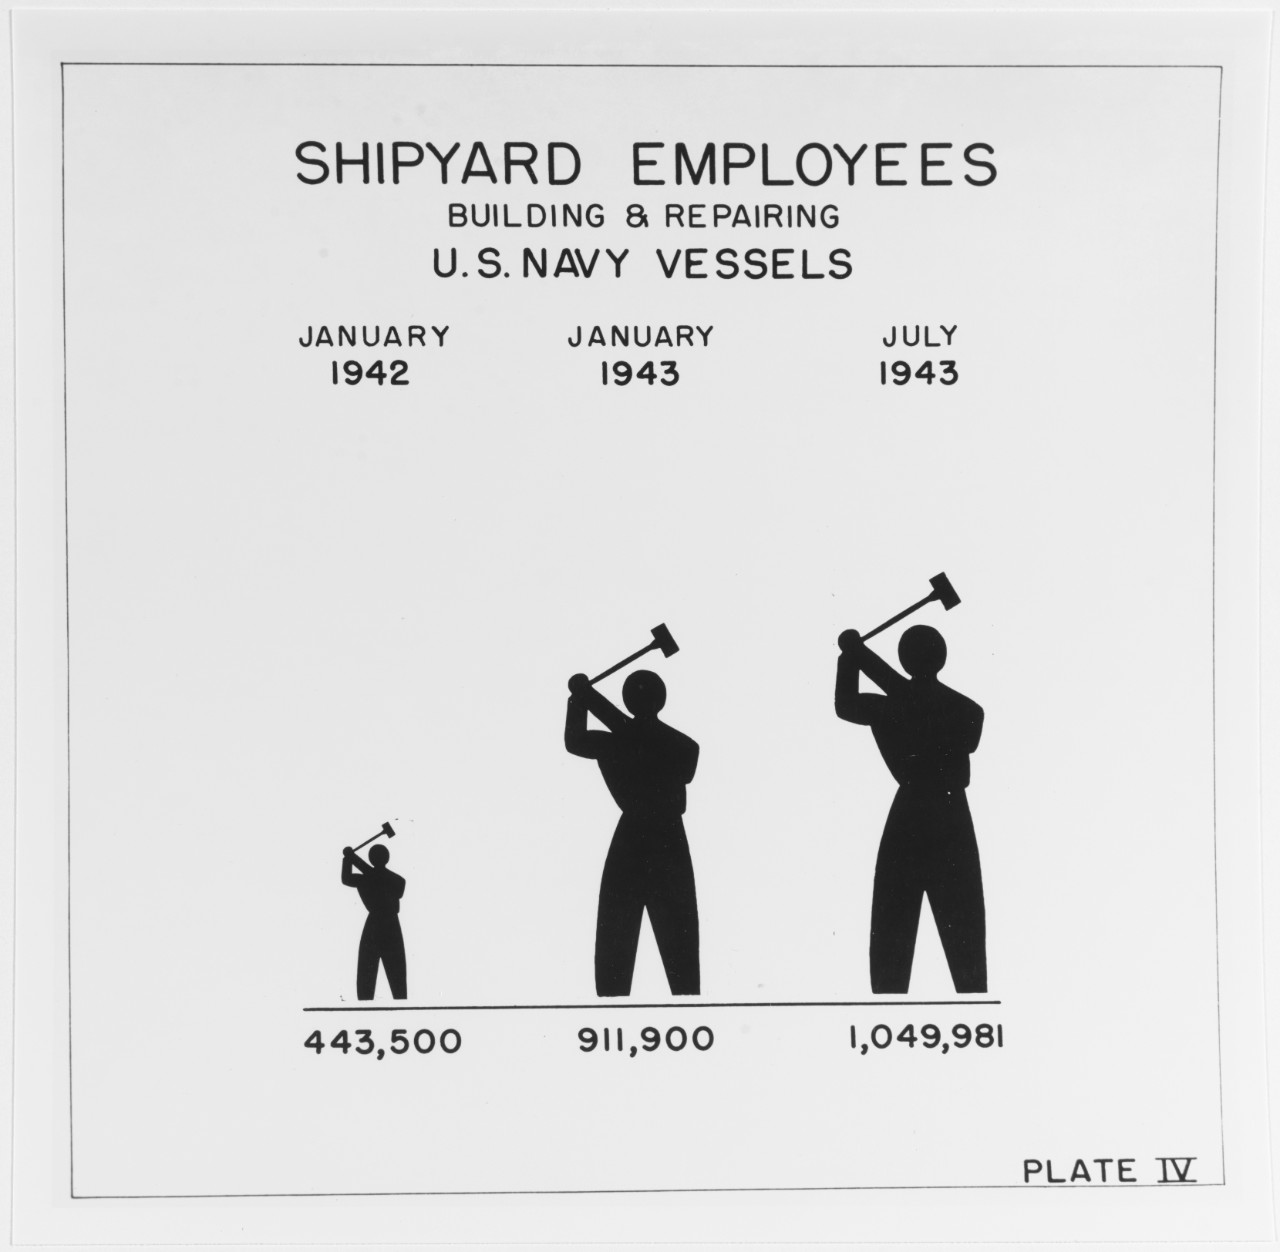 "Shipyard employees building & repairing U. S. Navy Vessels," January 1942 to July 1943